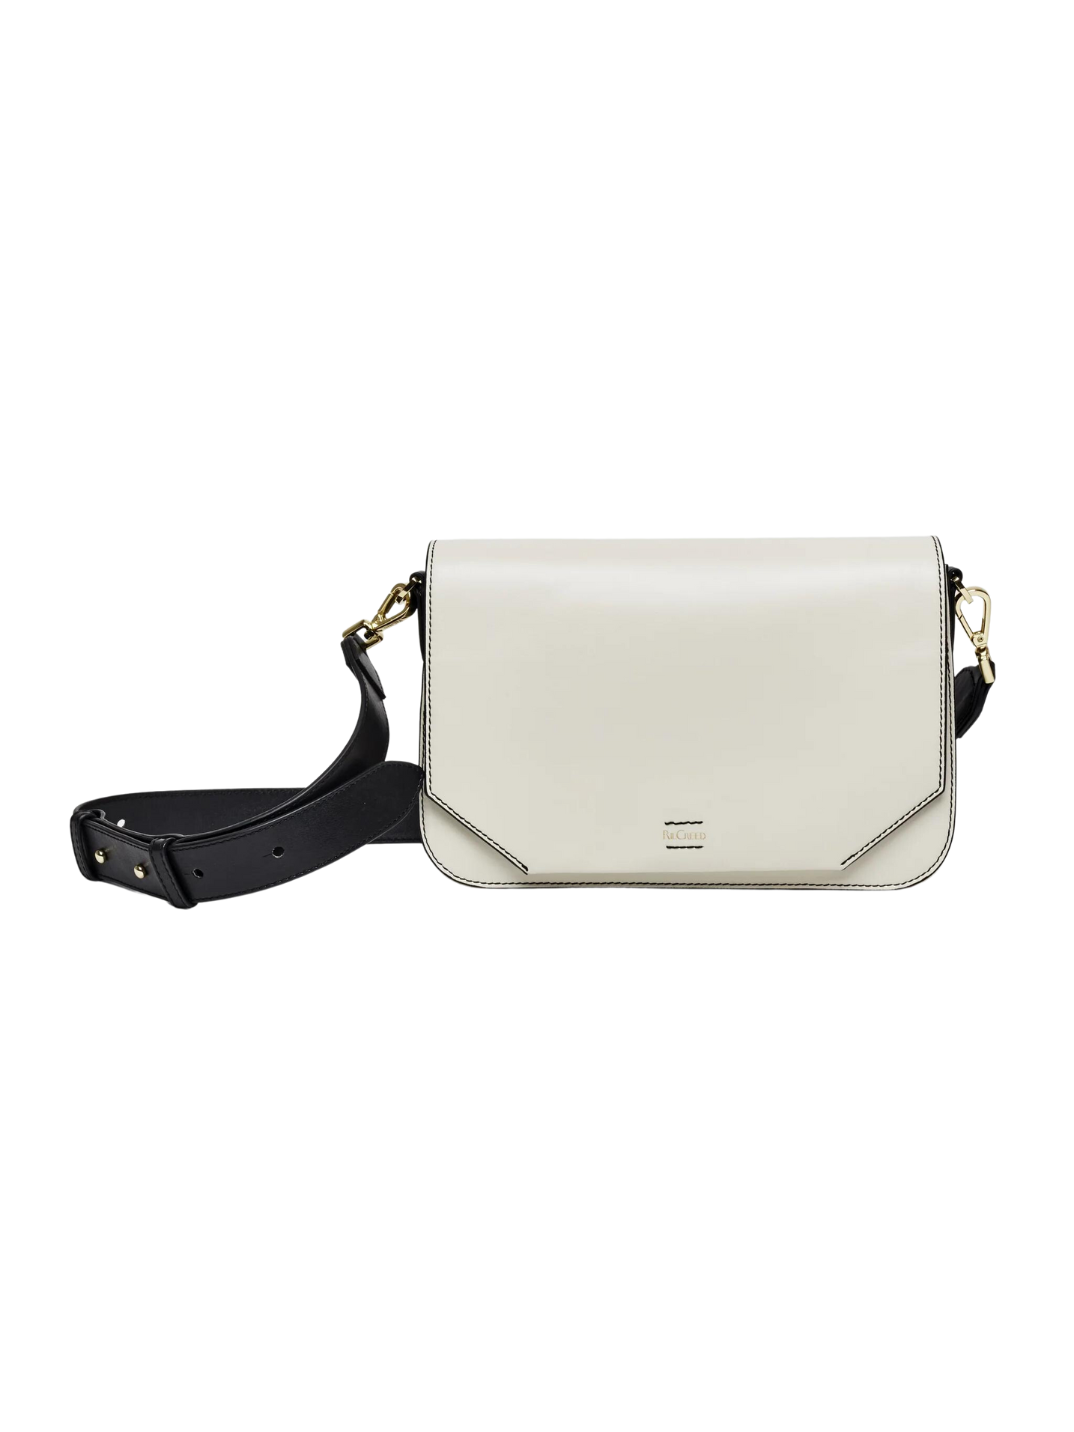 women's purse handbag stylish women's accessories genuine leather cute crossbody bag